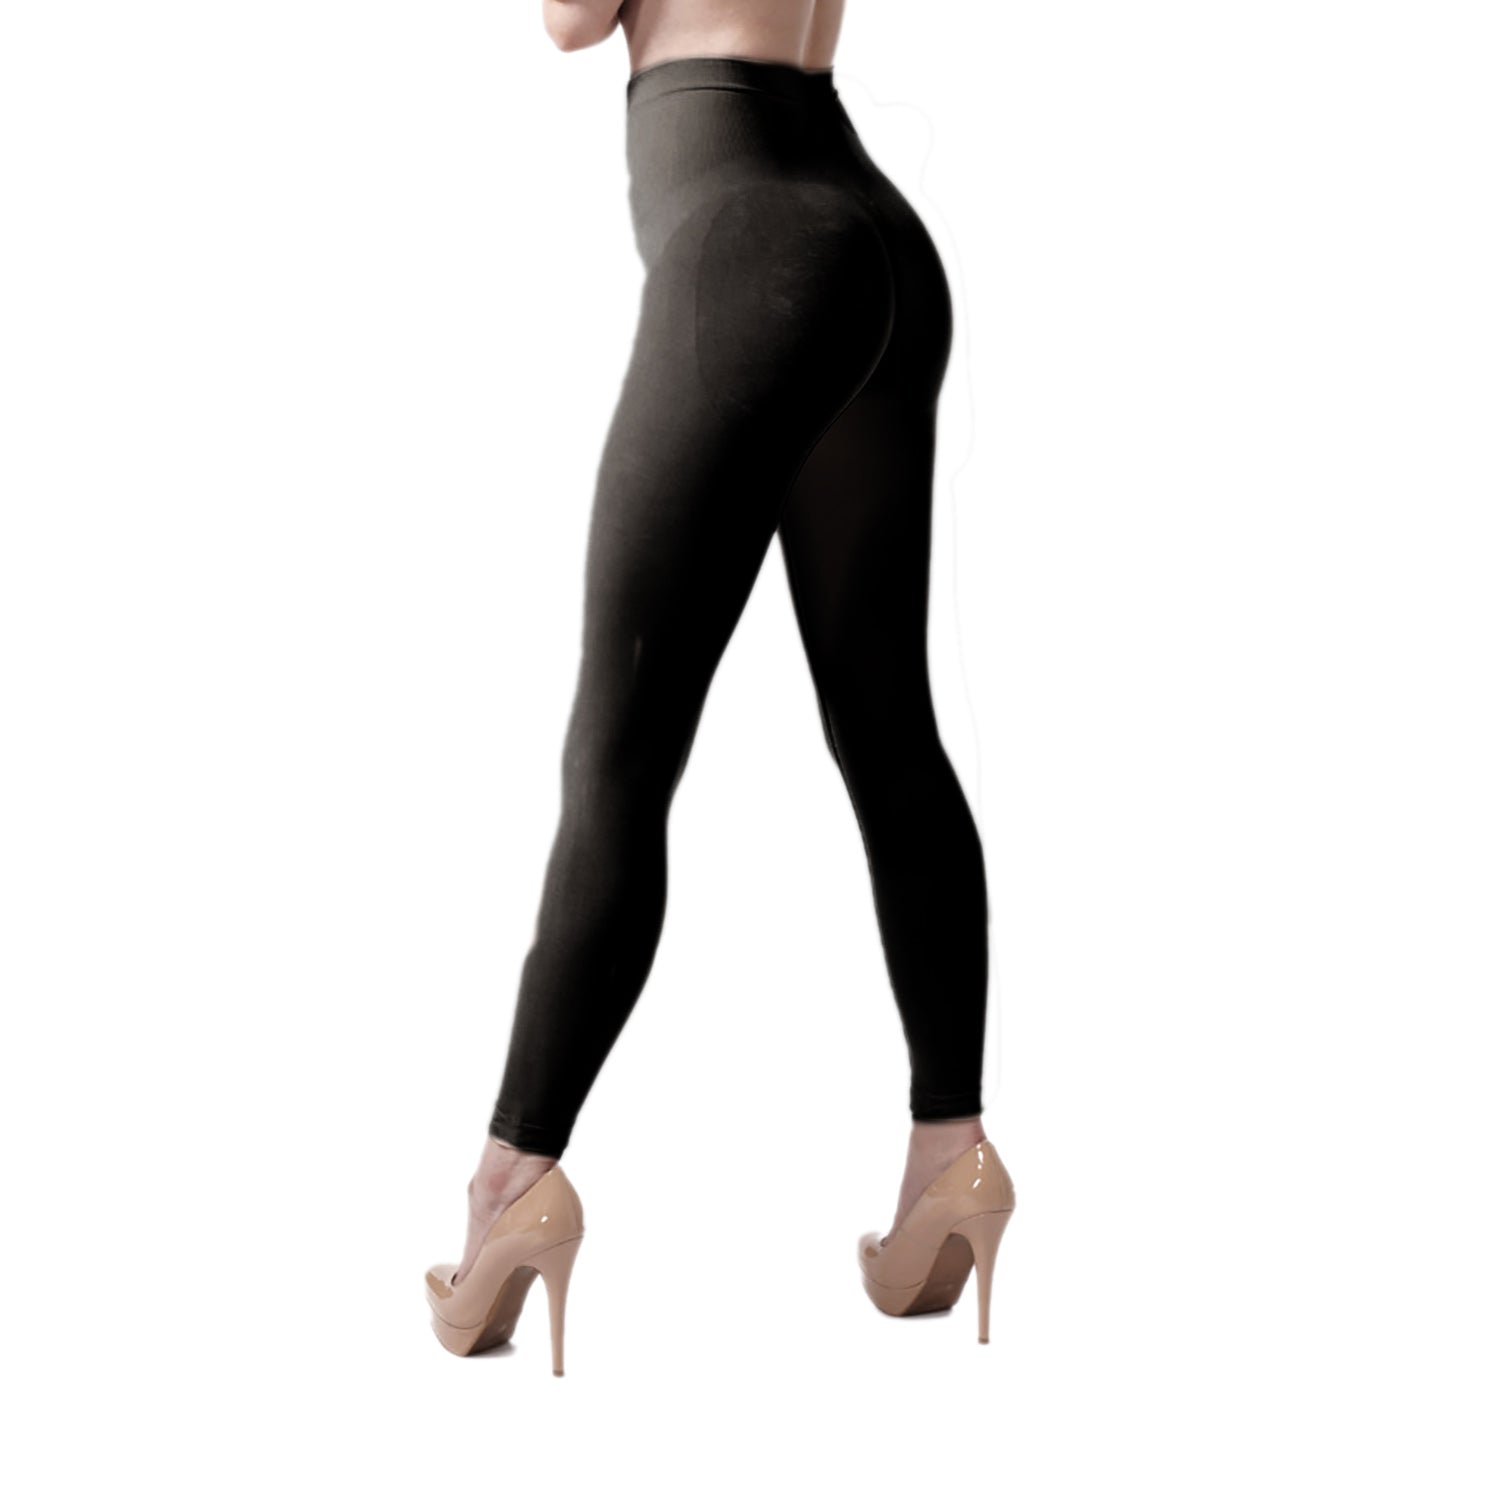 Rubberfashion Shapeware Legging Hose - Shaping Unterwäsche Damen - Mieder Leggings stark formend Anti Cellulite für Frauen